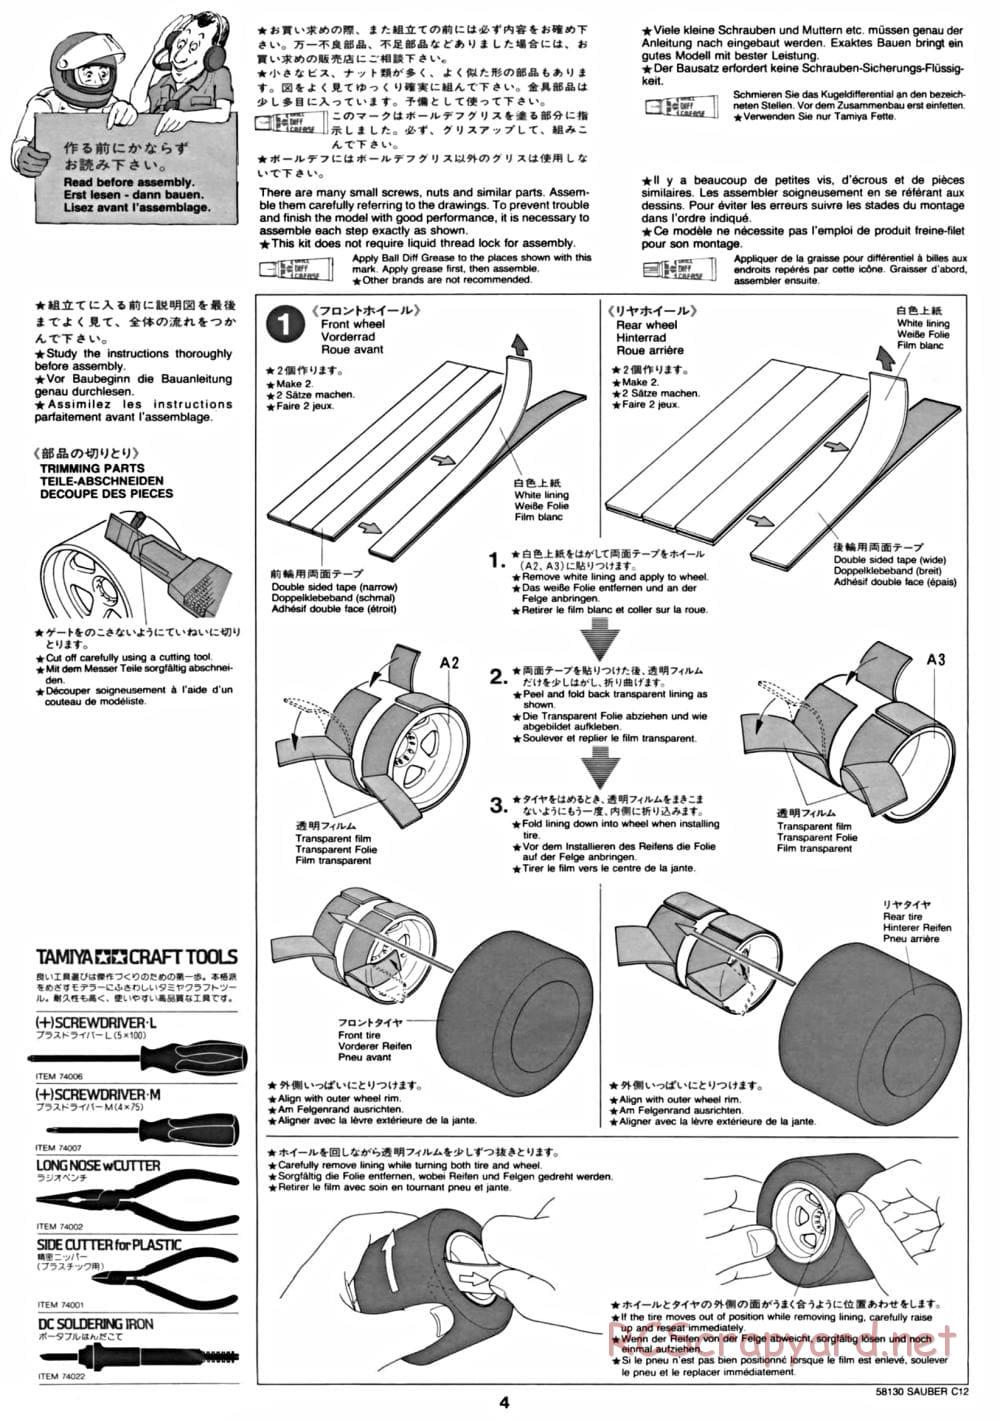 Tamiya - Sauber C12 - F103 Chassis - Manual - Page 4